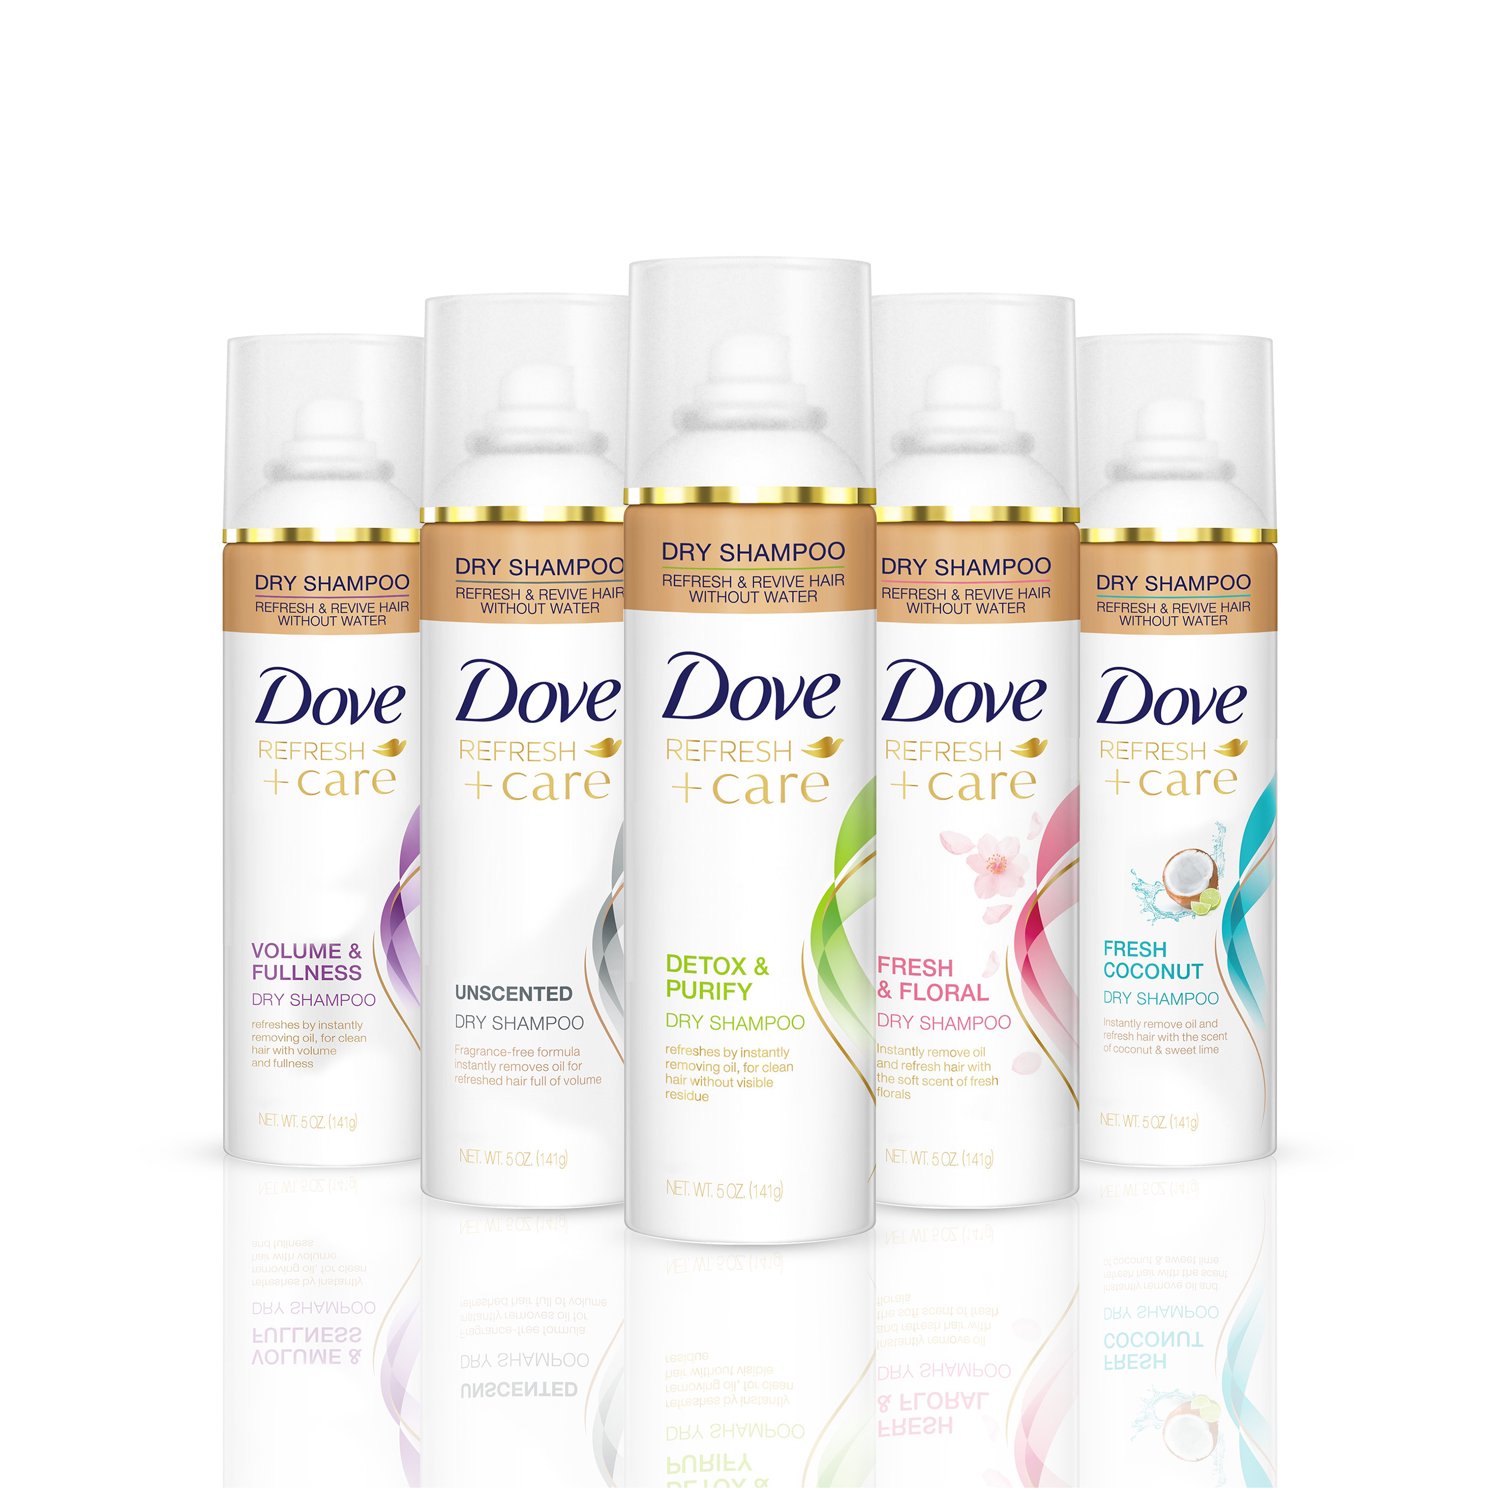 Dove Refresh+Care Detox and Purify Dry Shampoo, 5 oz - image 4 of 9